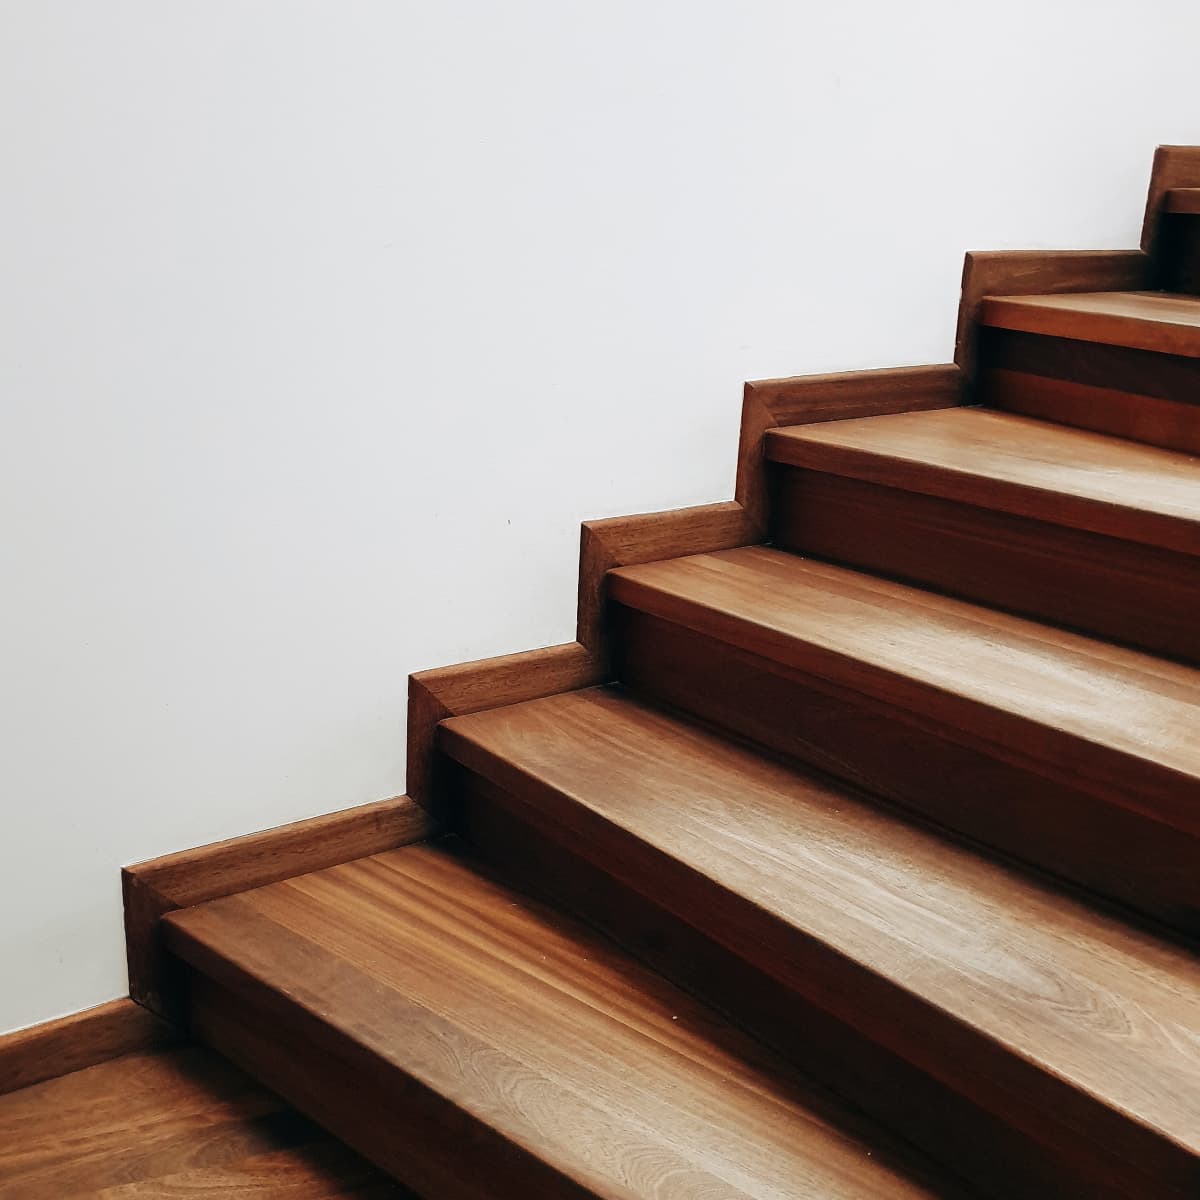 What Is The Best Hardwood Floor Glue Or, Gluing Hardwood Floors To Concrete